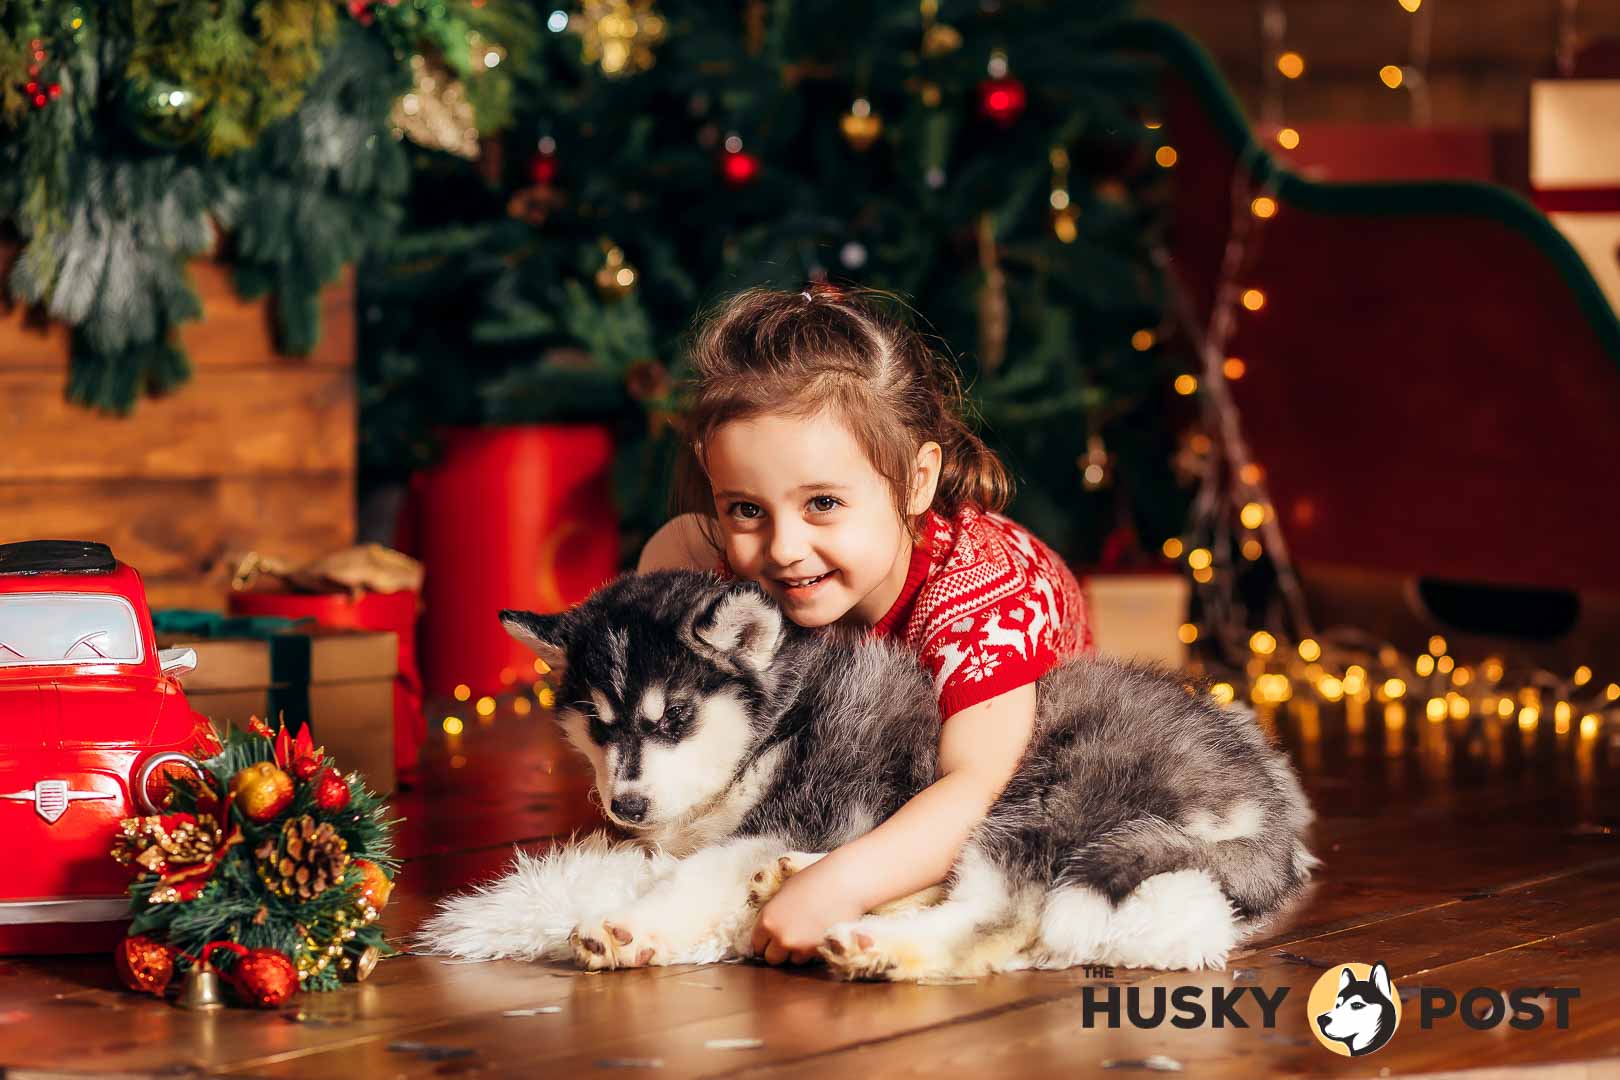 Husky with children on a Christmas